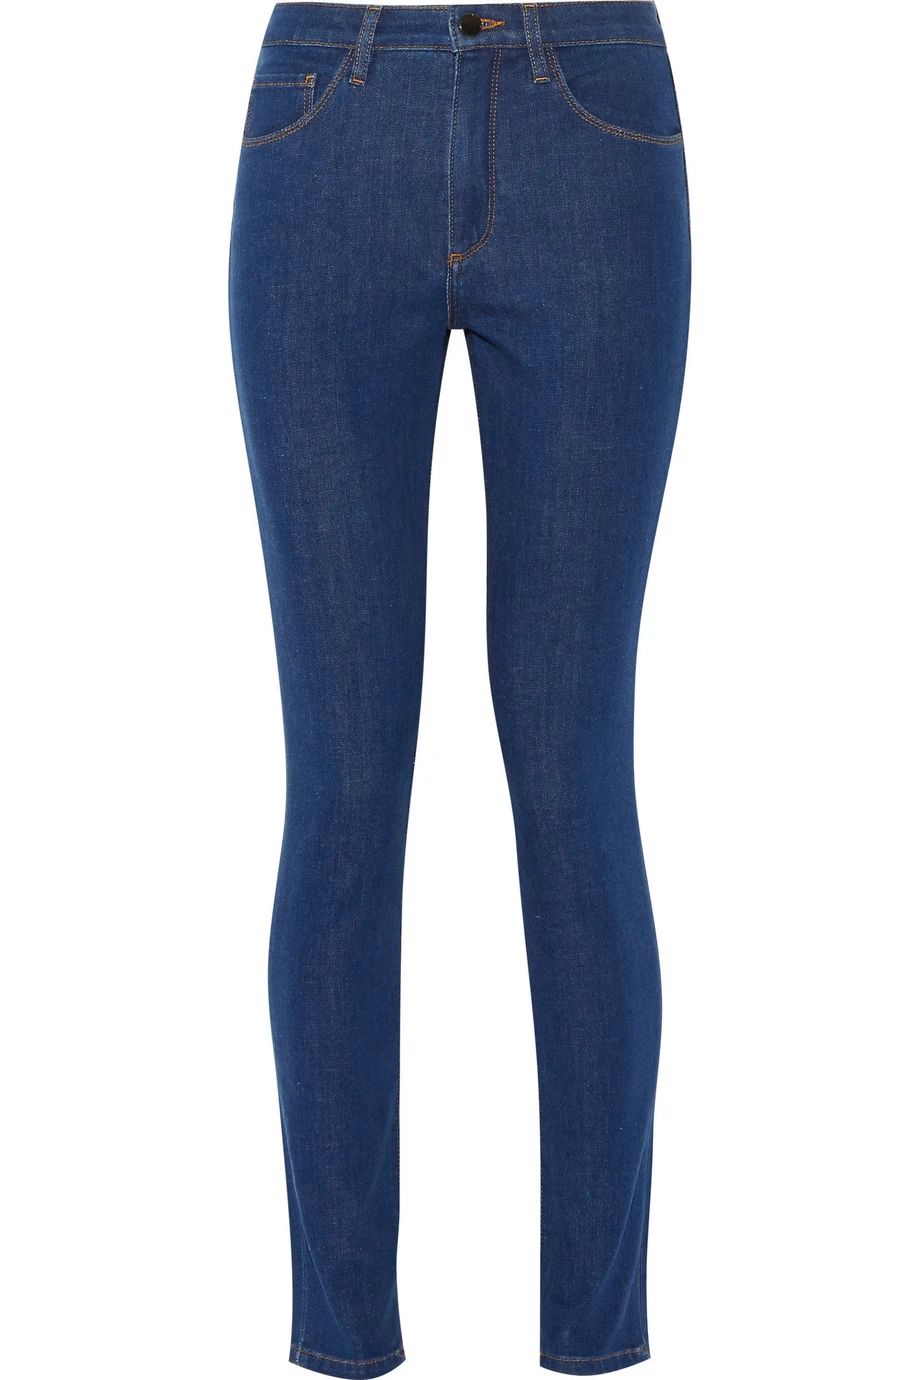 Powerhigh High-Rise Skinny Jeans Victoria Beckham Denim, Blue, Women's, Size: 24 | NET-A-PORTER (US)